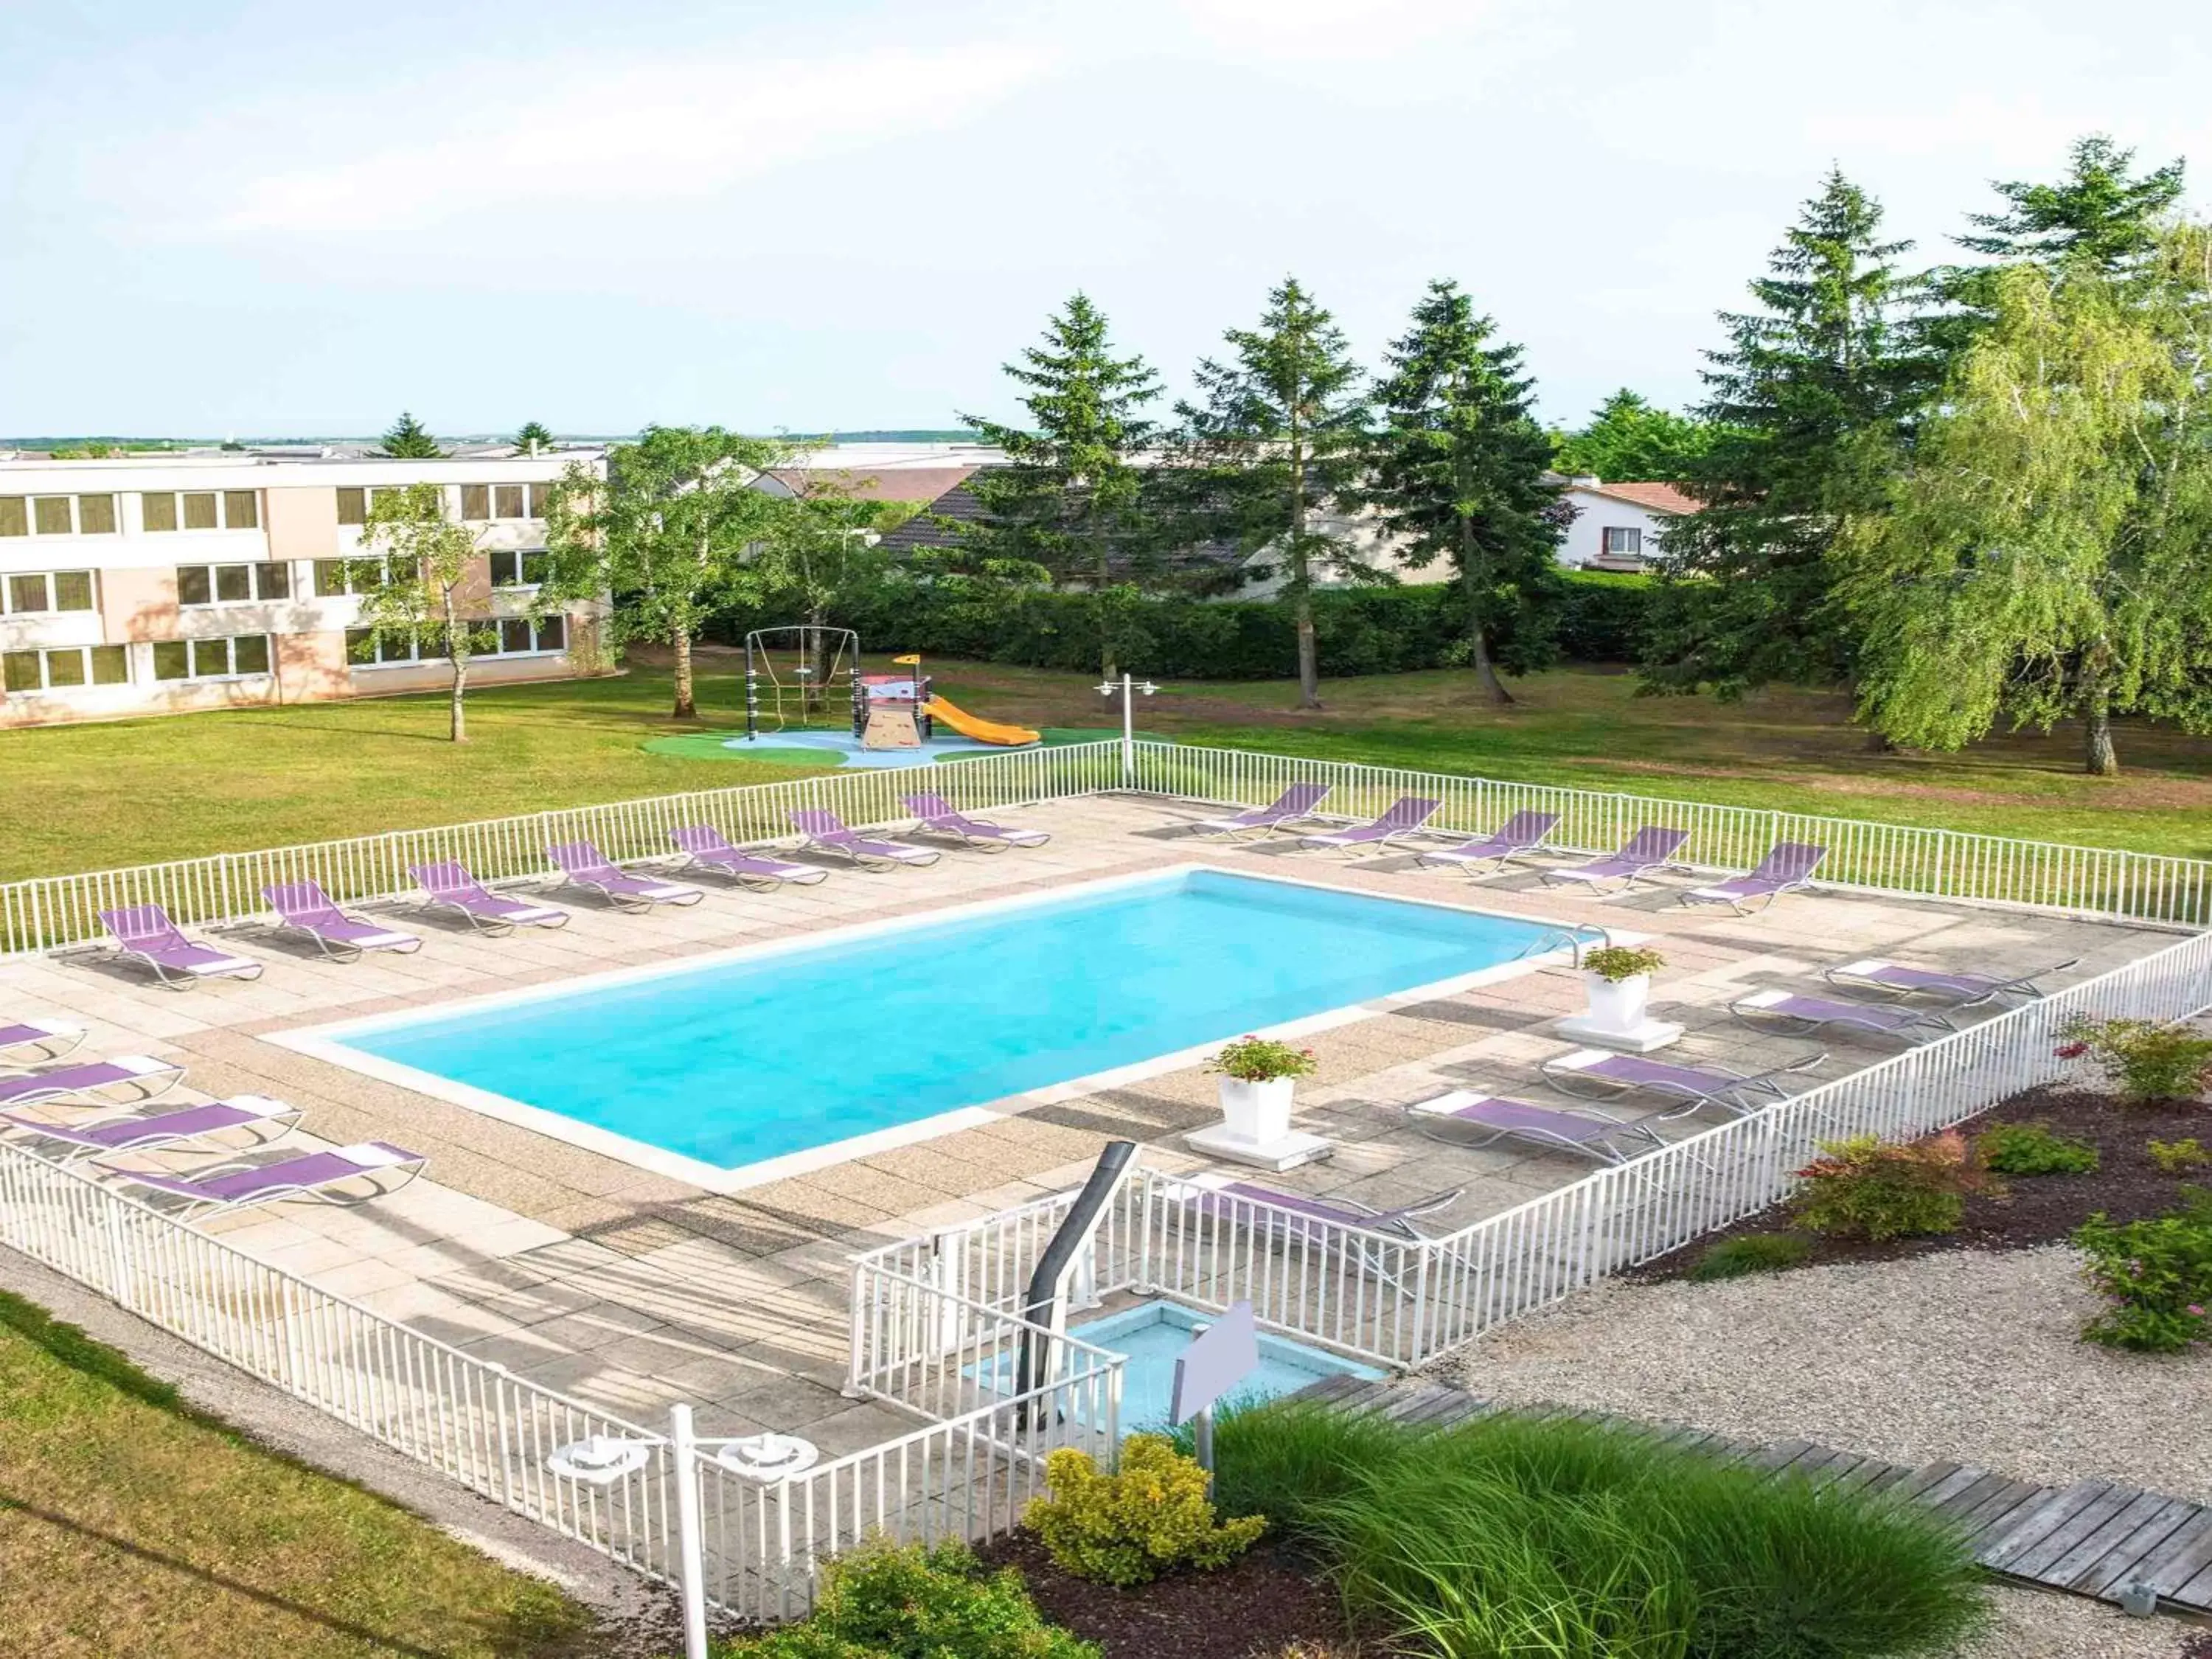 On site, Pool View in Novotel Dijon Sud